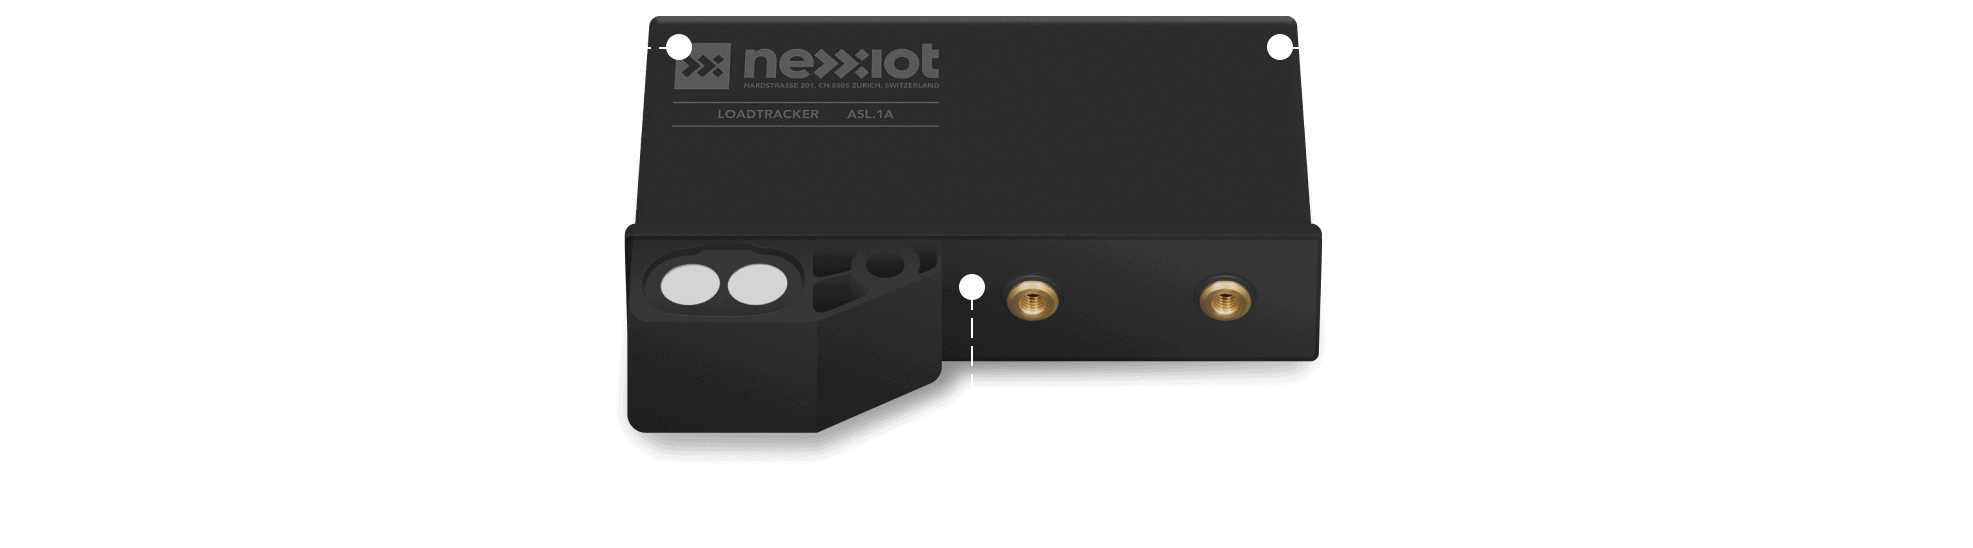 Nexxiot Loadtracker operating parameters